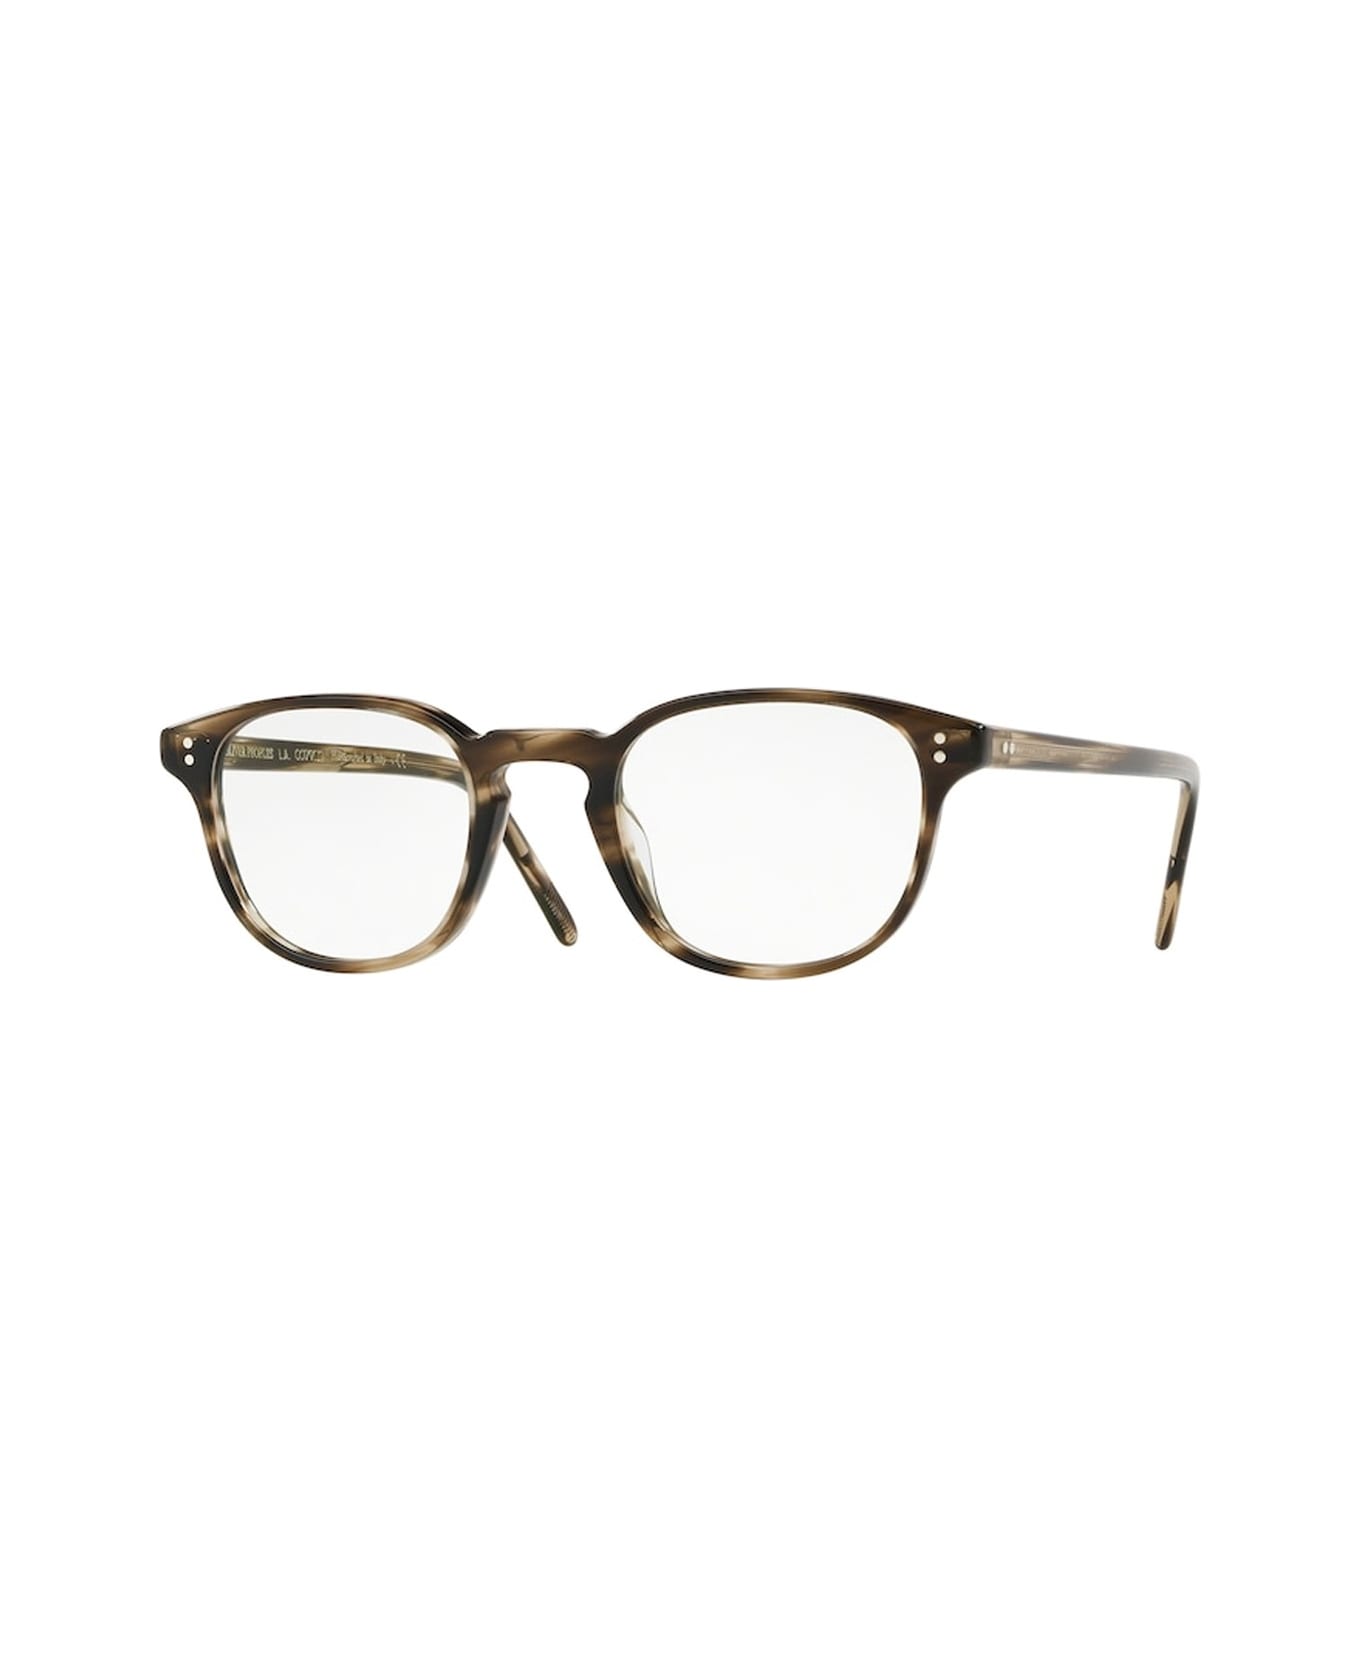 Oliver Peoples Ov5219 Glasses - Marrone